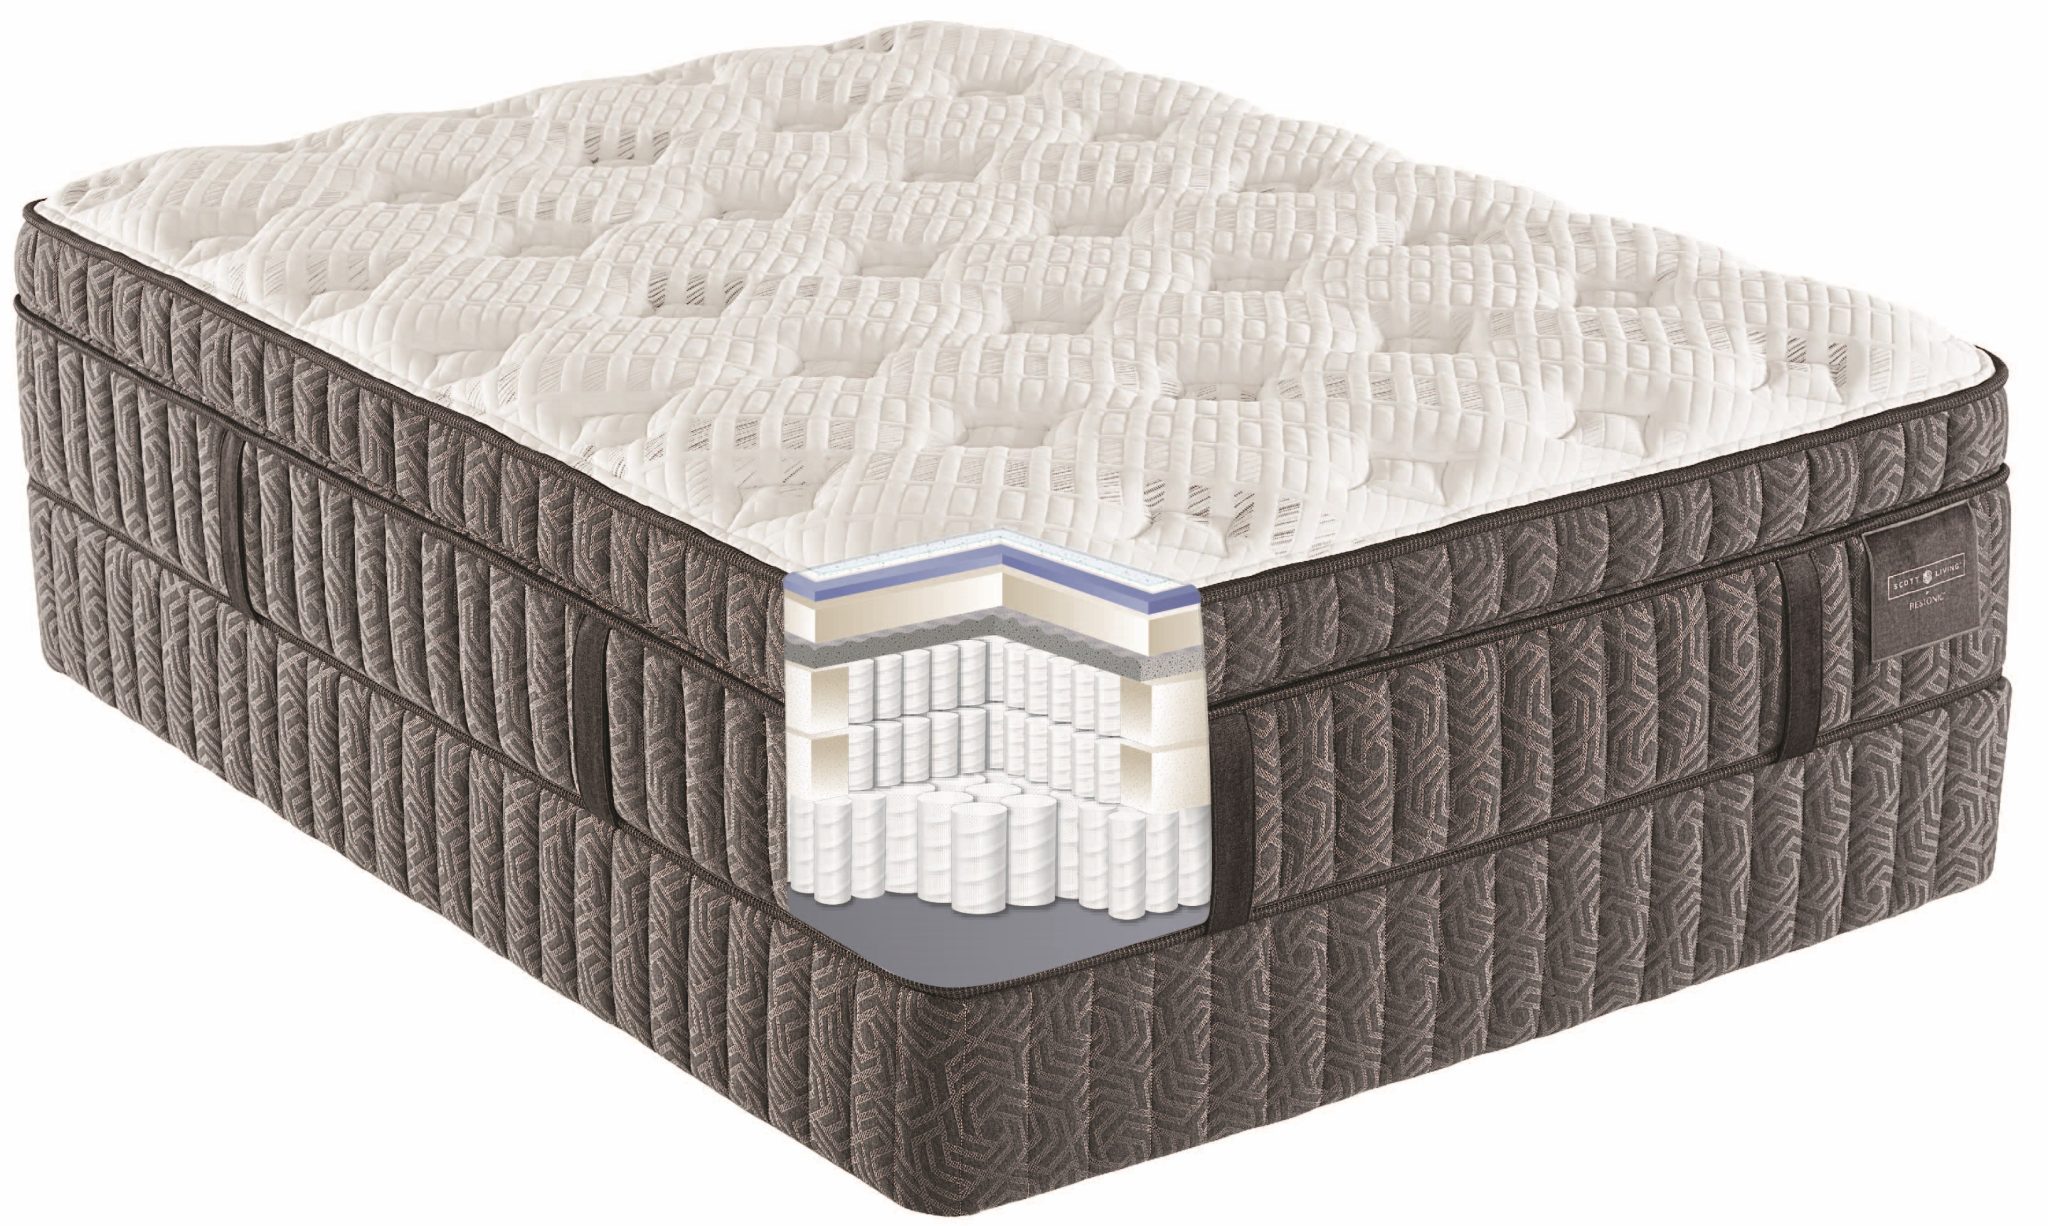 presto customizable organic latex mattress review